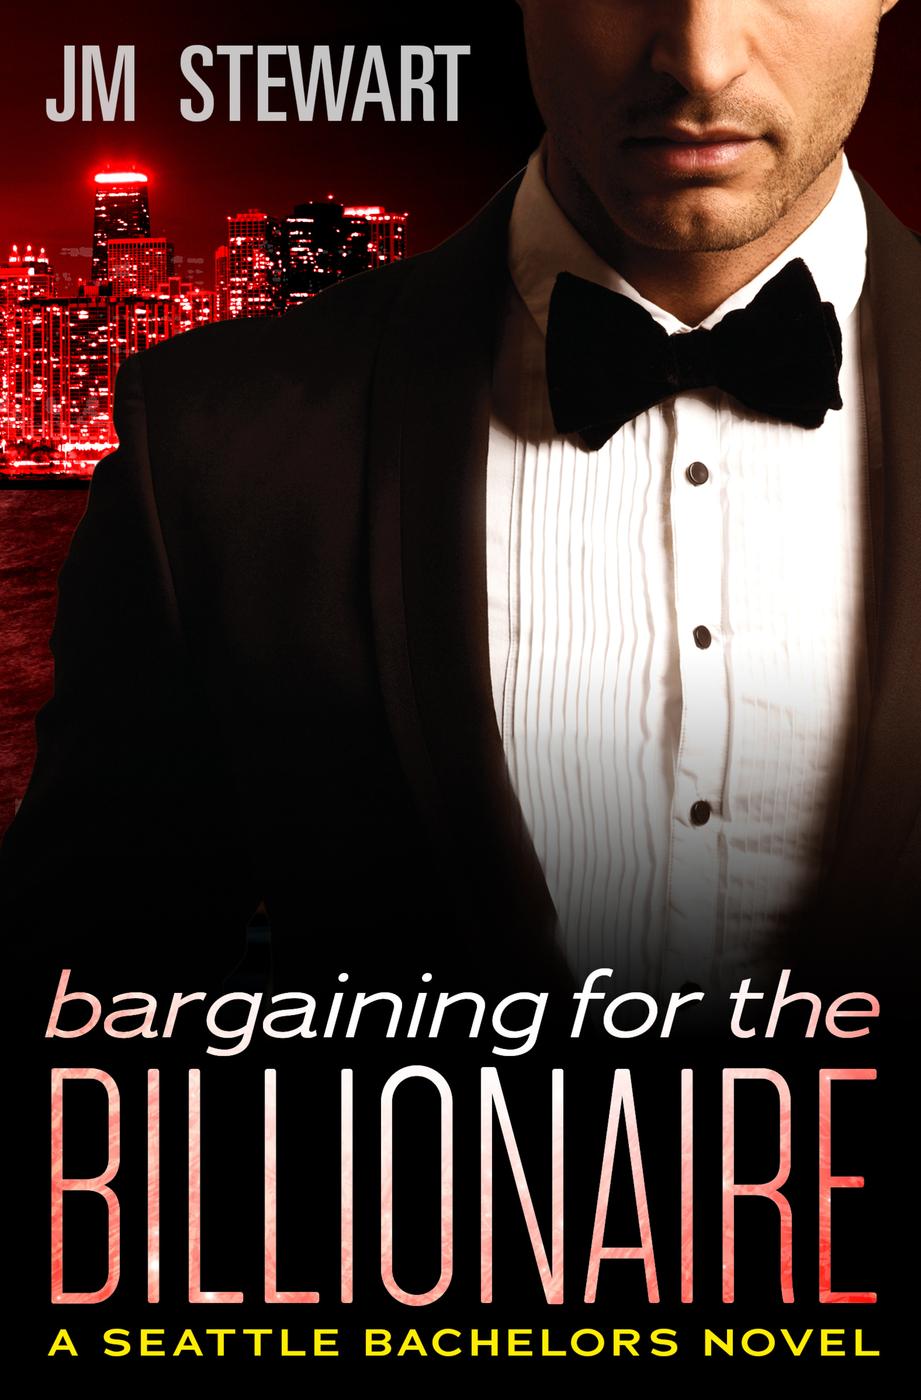 Read Bargaining for the Billionaire by JM Stewart online free full book ...